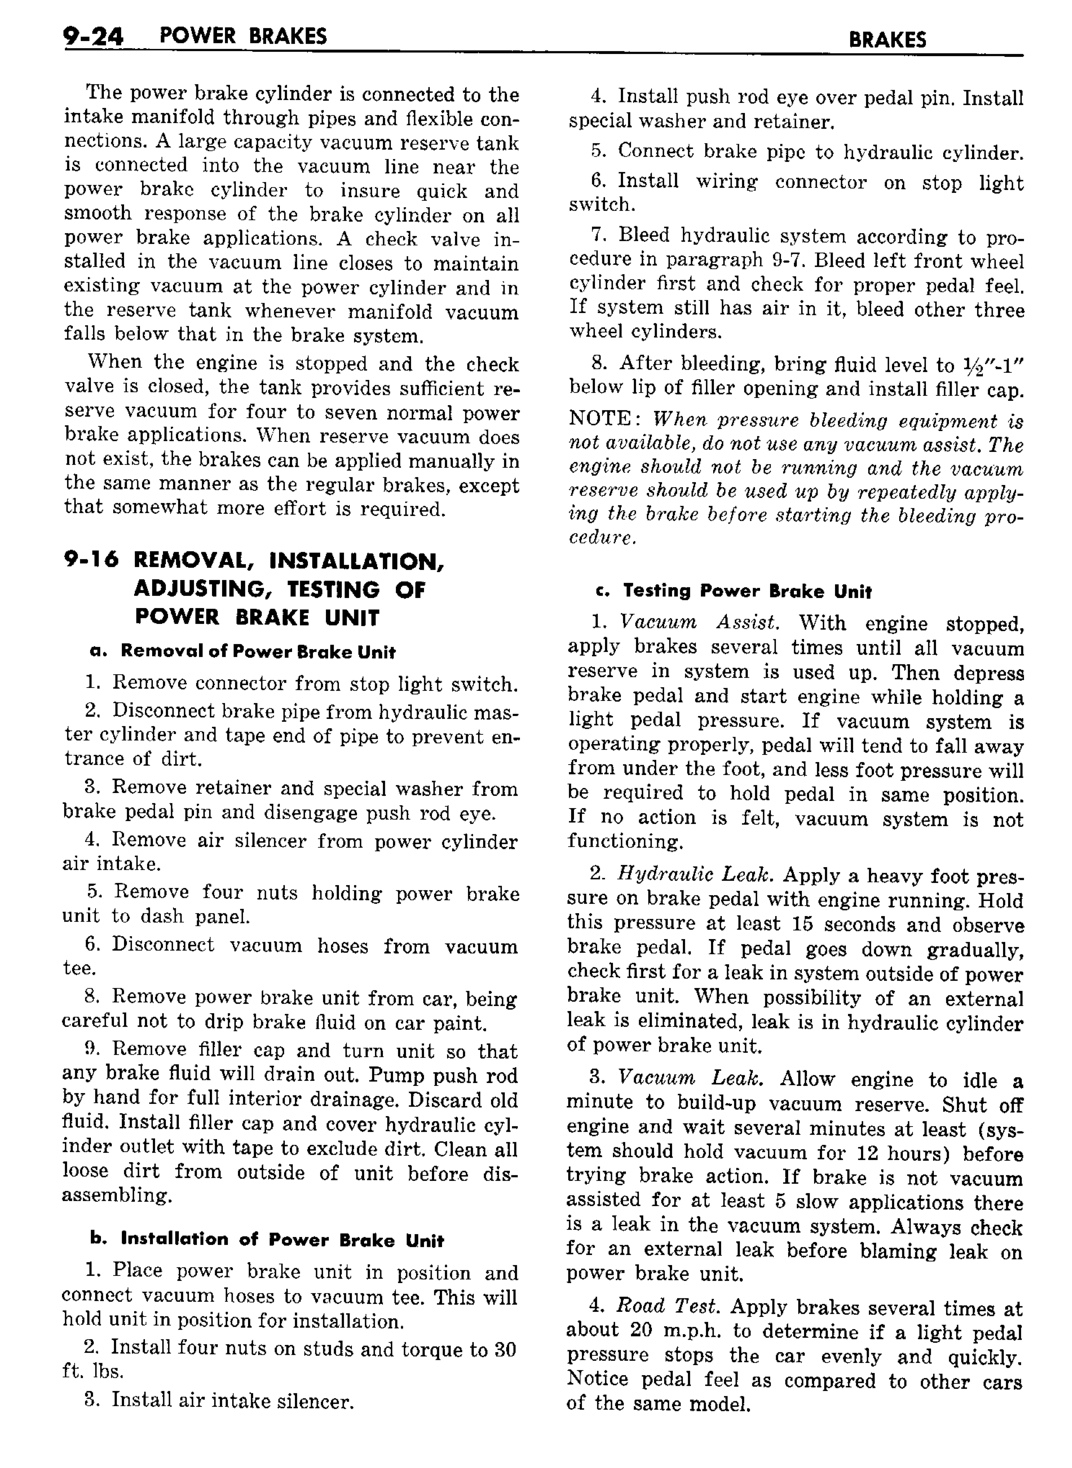 n_10 1960 Buick Shop Manual - Brakes-024-024.jpg